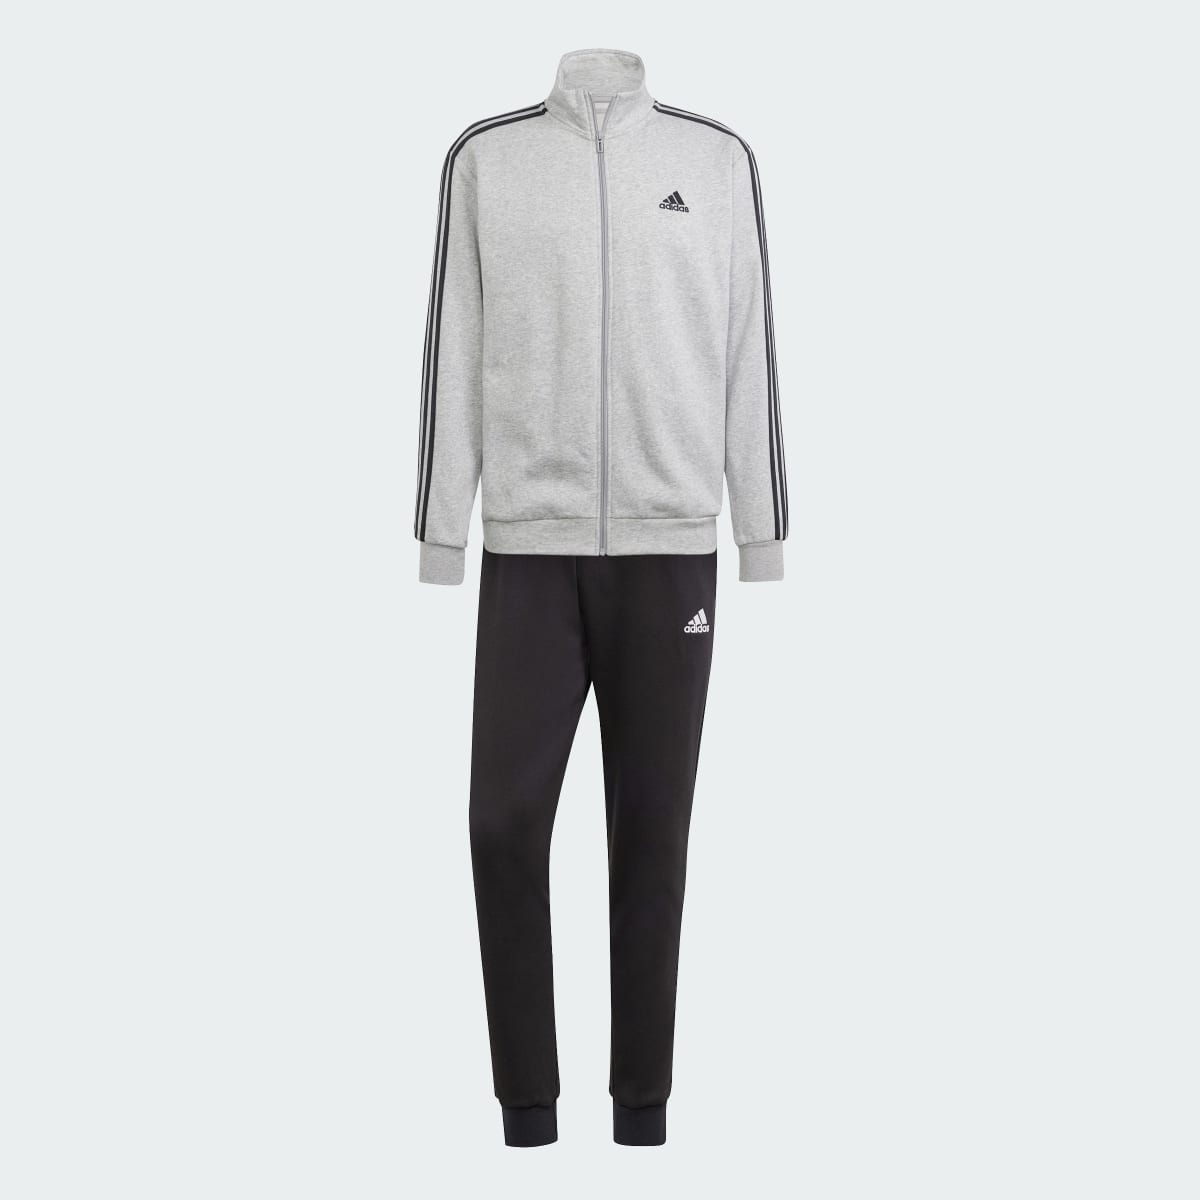 Adidas Basic 3-Stripes Fleece Track Suit. 5